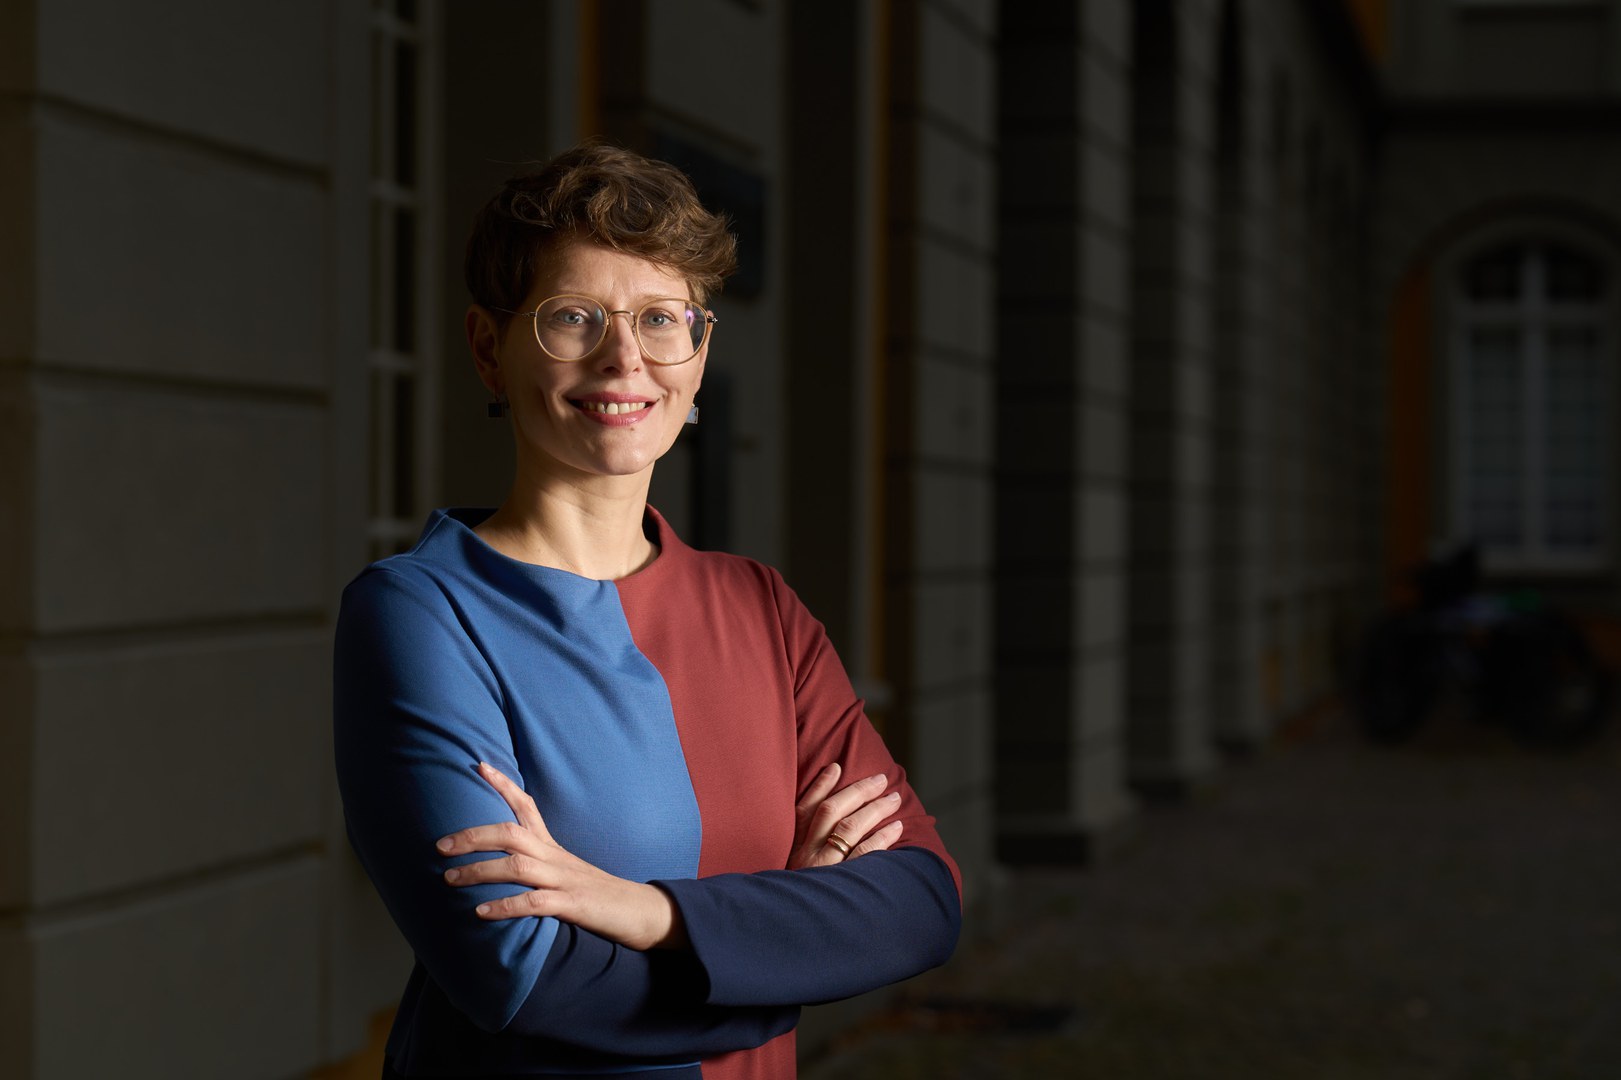 Jun.-Prof. Dr. Julia Binter is the new Argelander Professor